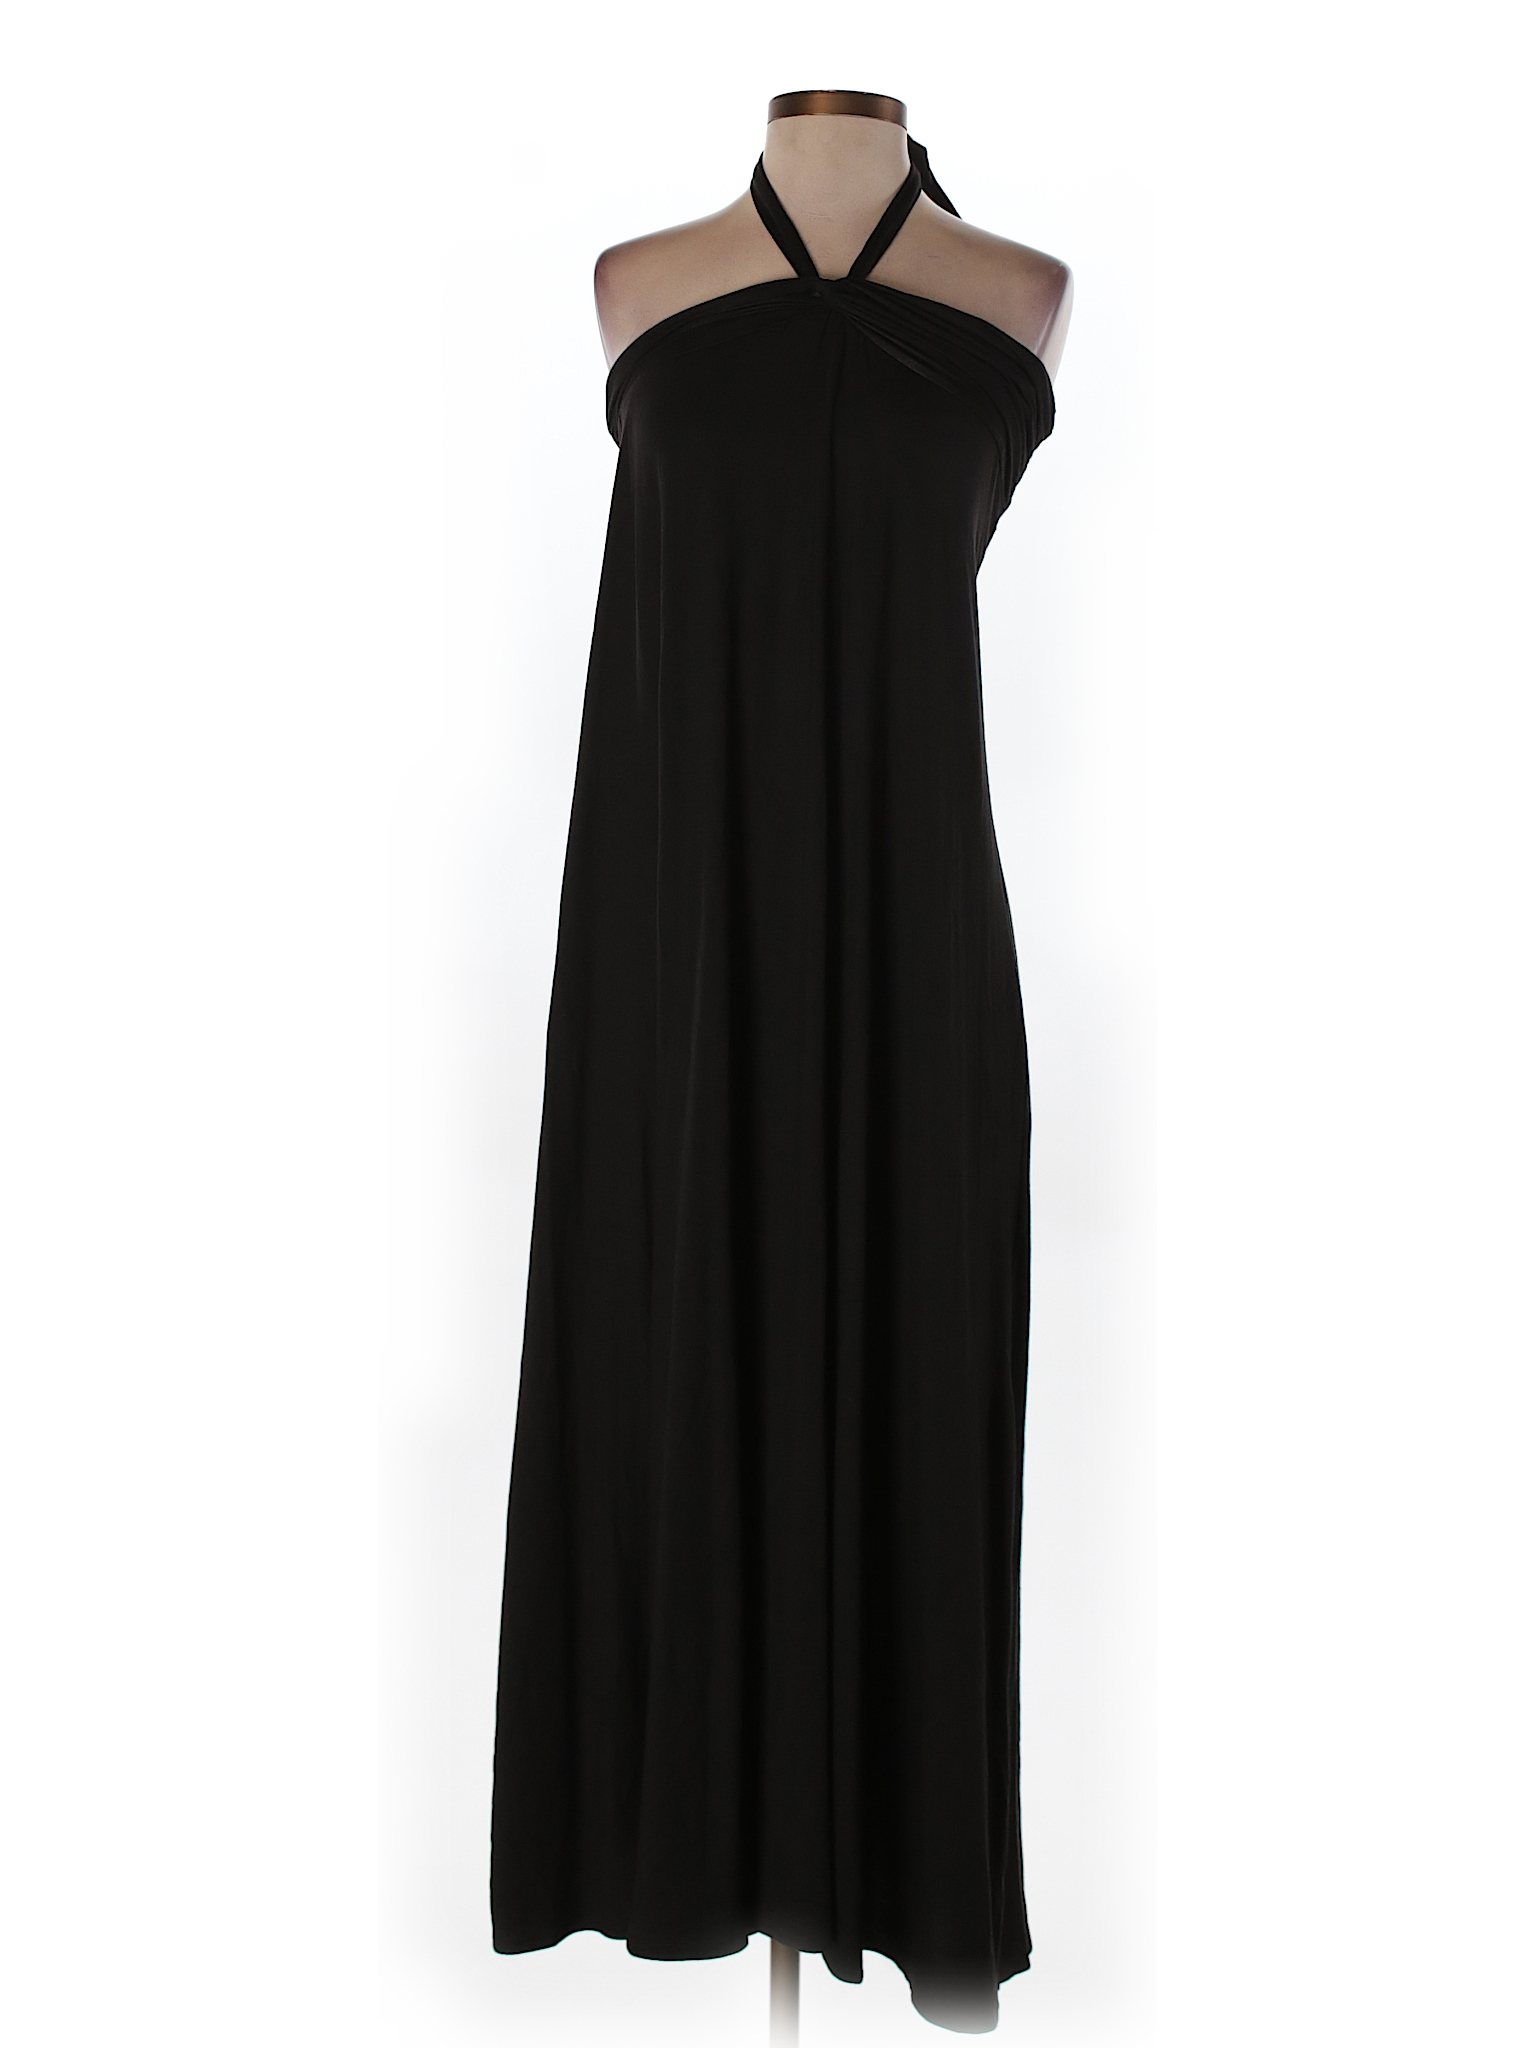 Victoria's Secret Solid Black Casual Dress Size XS - 85% off | thredUP